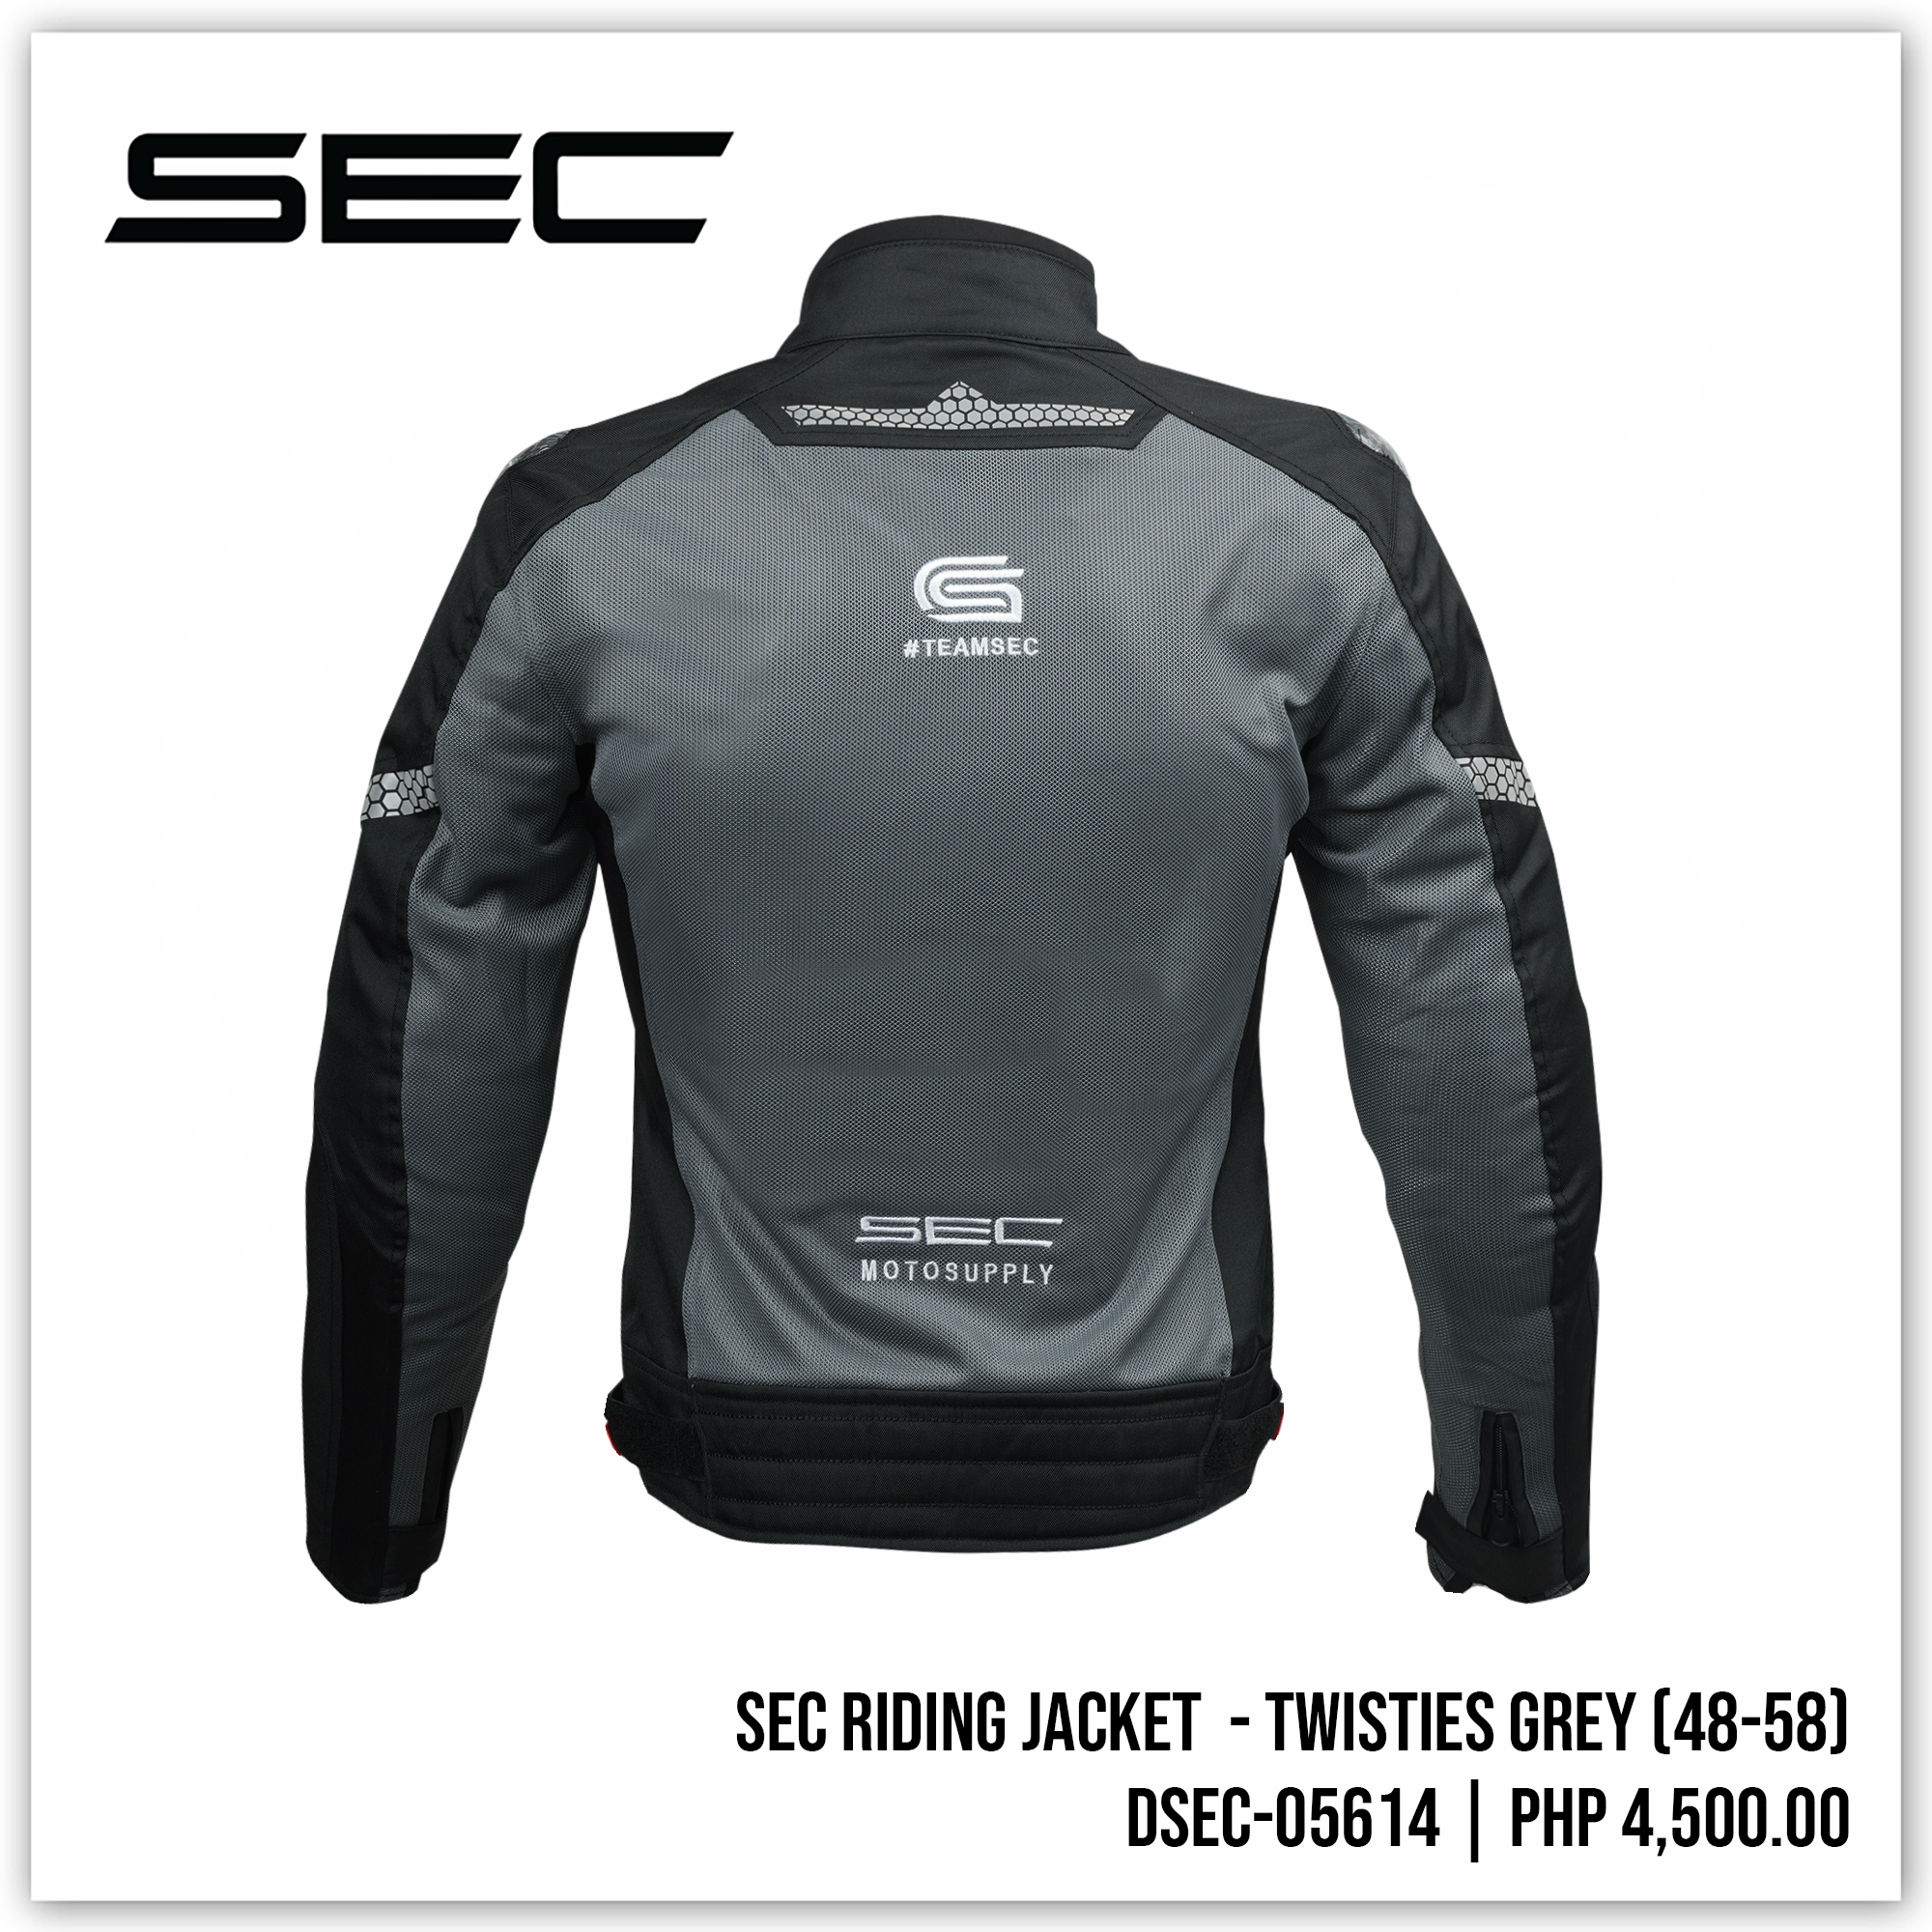 SEC Riding Jacket - Twisties Grey